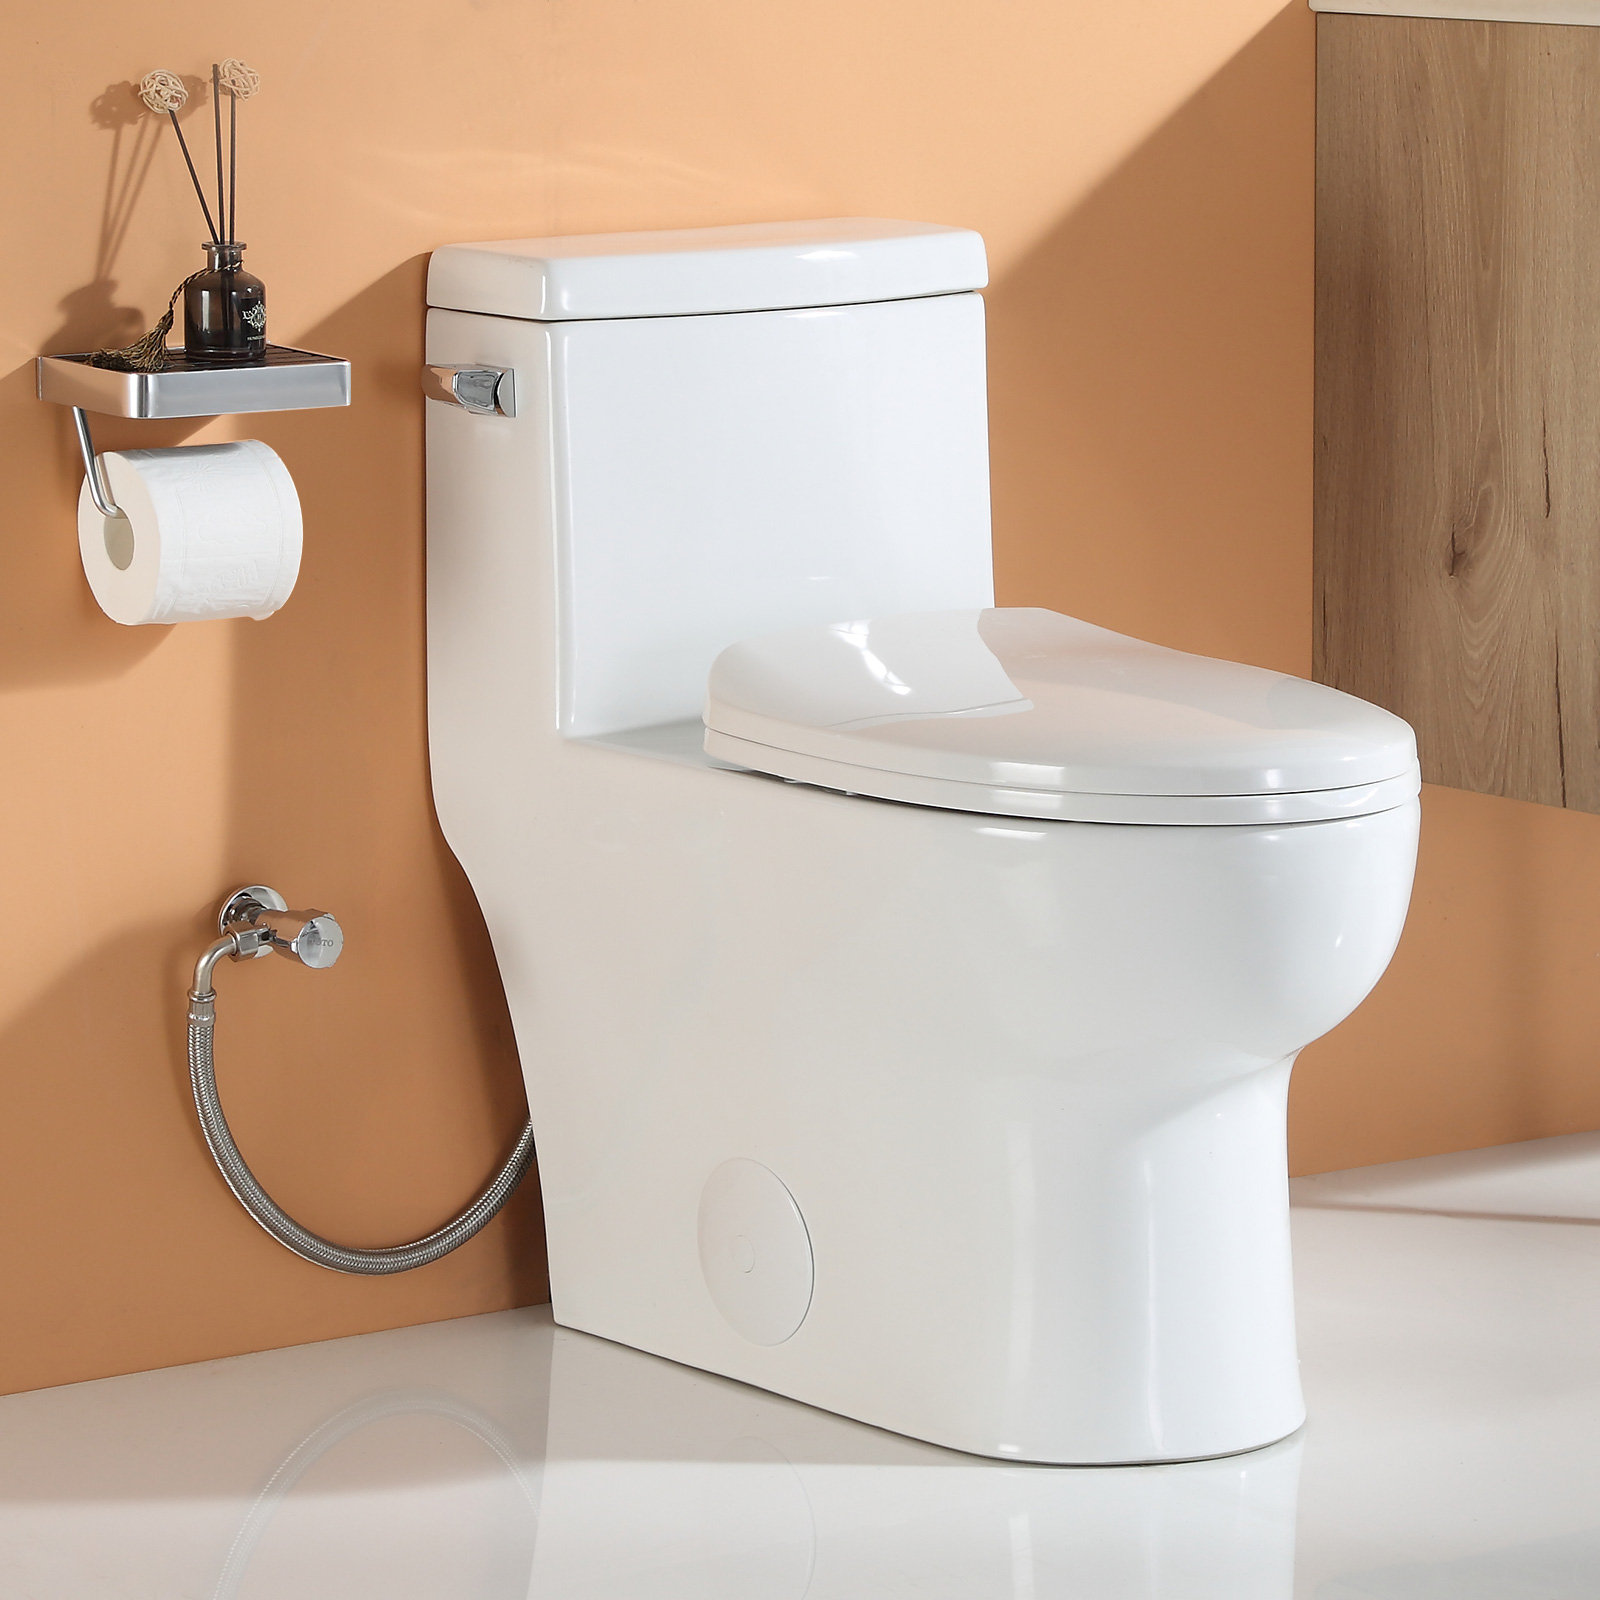 HOROW Modern Small Toilet Nib One Piece Toilet Dual Flush with Soft Closing Seat,Comfortable Seat Height Bathroom Toilets, Size: Medium, White